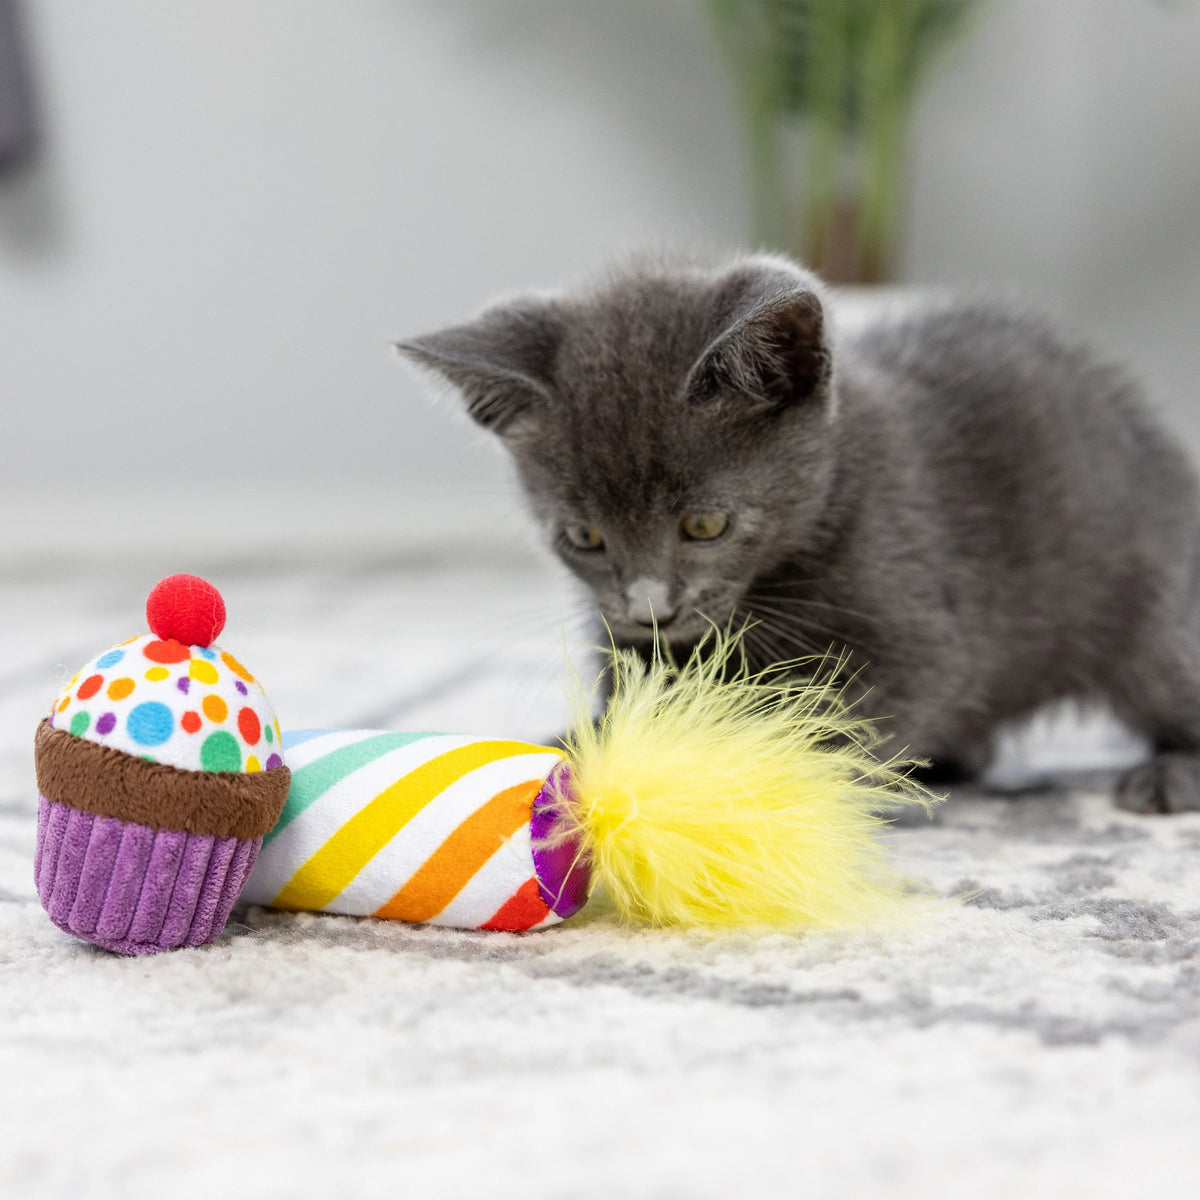 Me-Wow Cupcake & Candle 2pk Cat Toy – Huxley & Kent